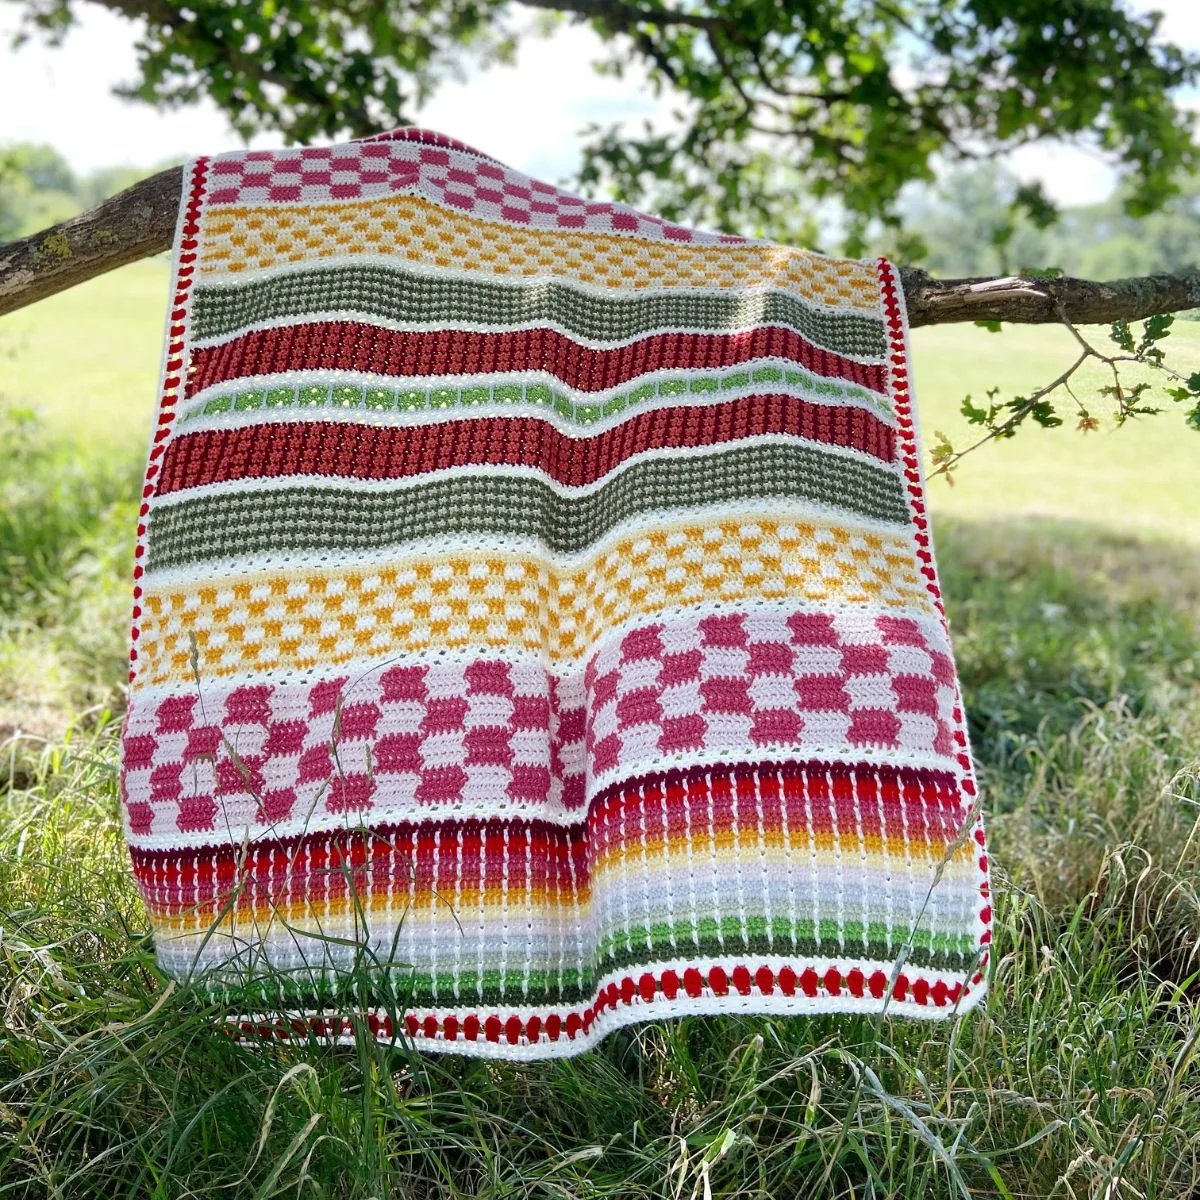 Colorful crochet sampler blanket blowing the breeze.